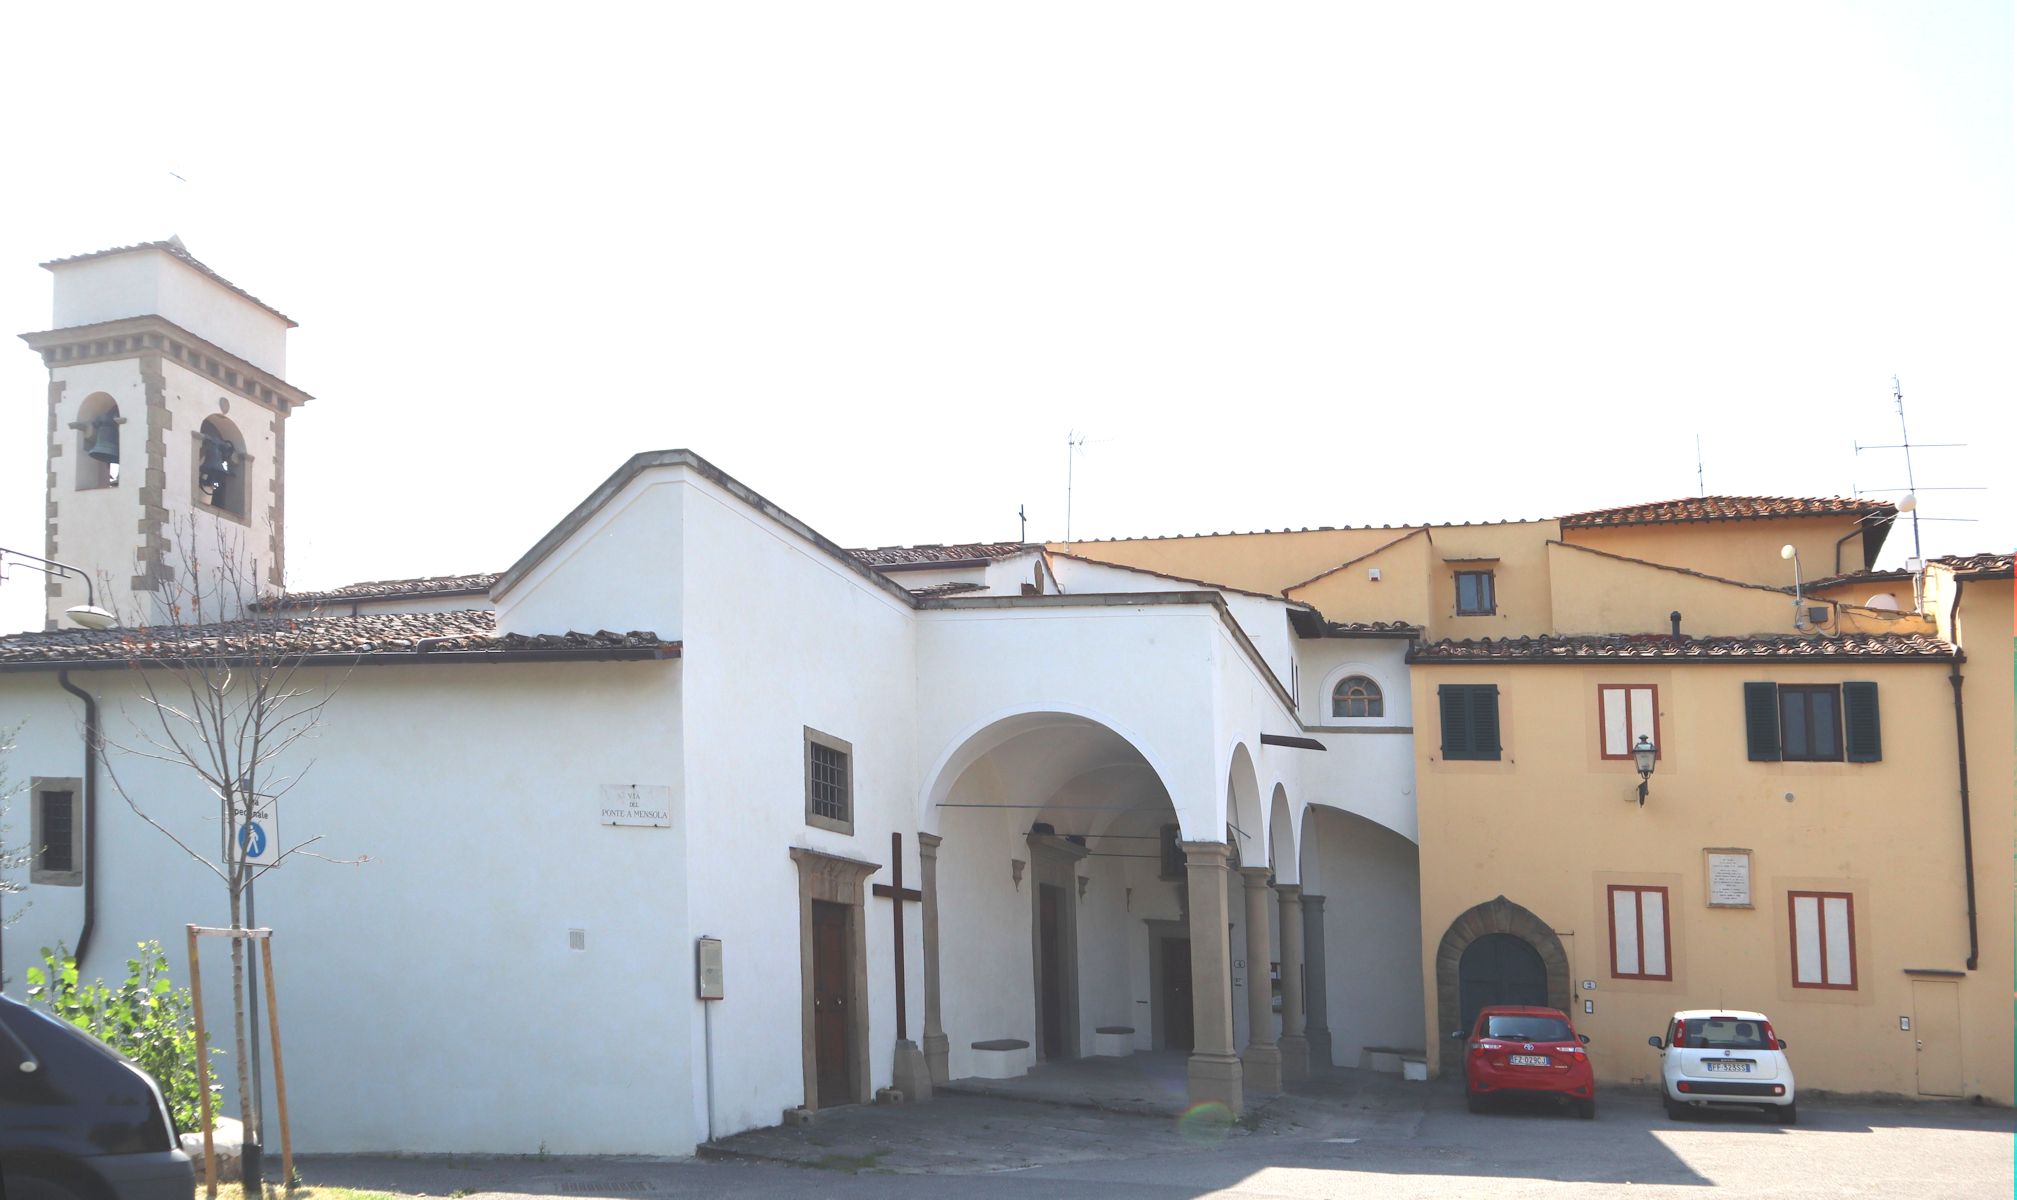 Kirche und Kloster San Martino a Mensola bei Florenz